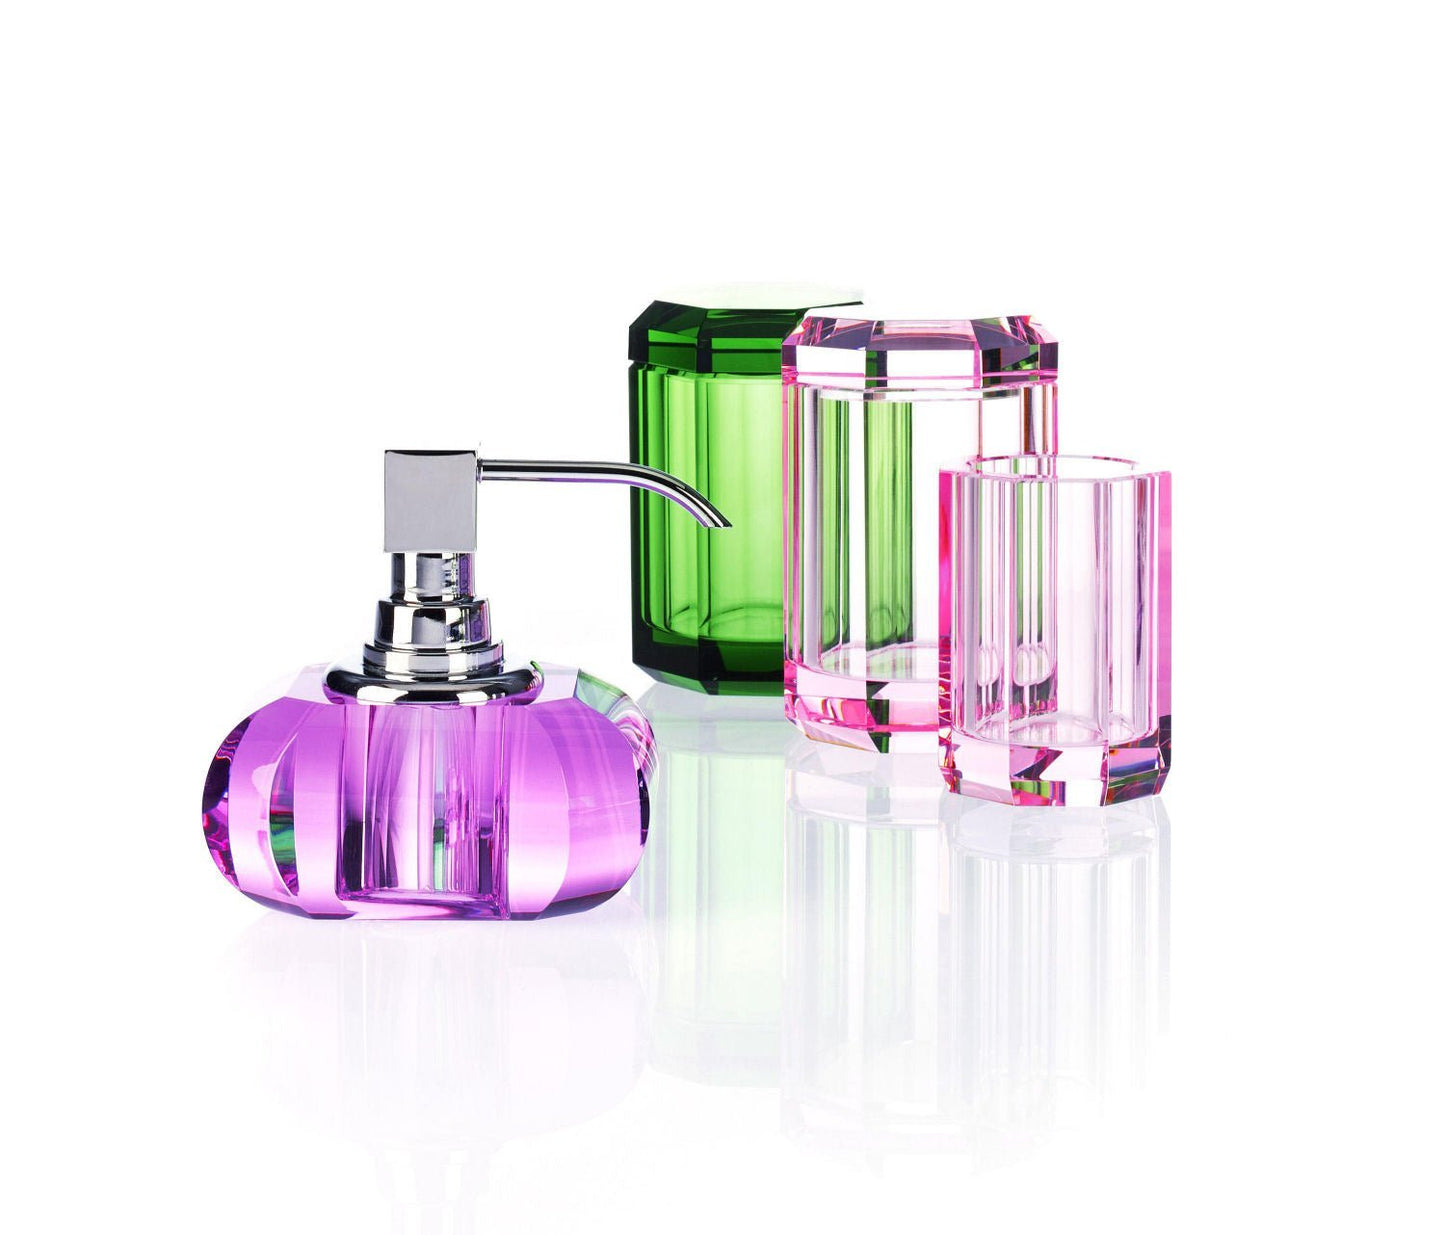 Shiny Gold Liquid Soap Glass Dispenser | Violet - |VESIMI Design| Luxury Bathrooms and Home Decor